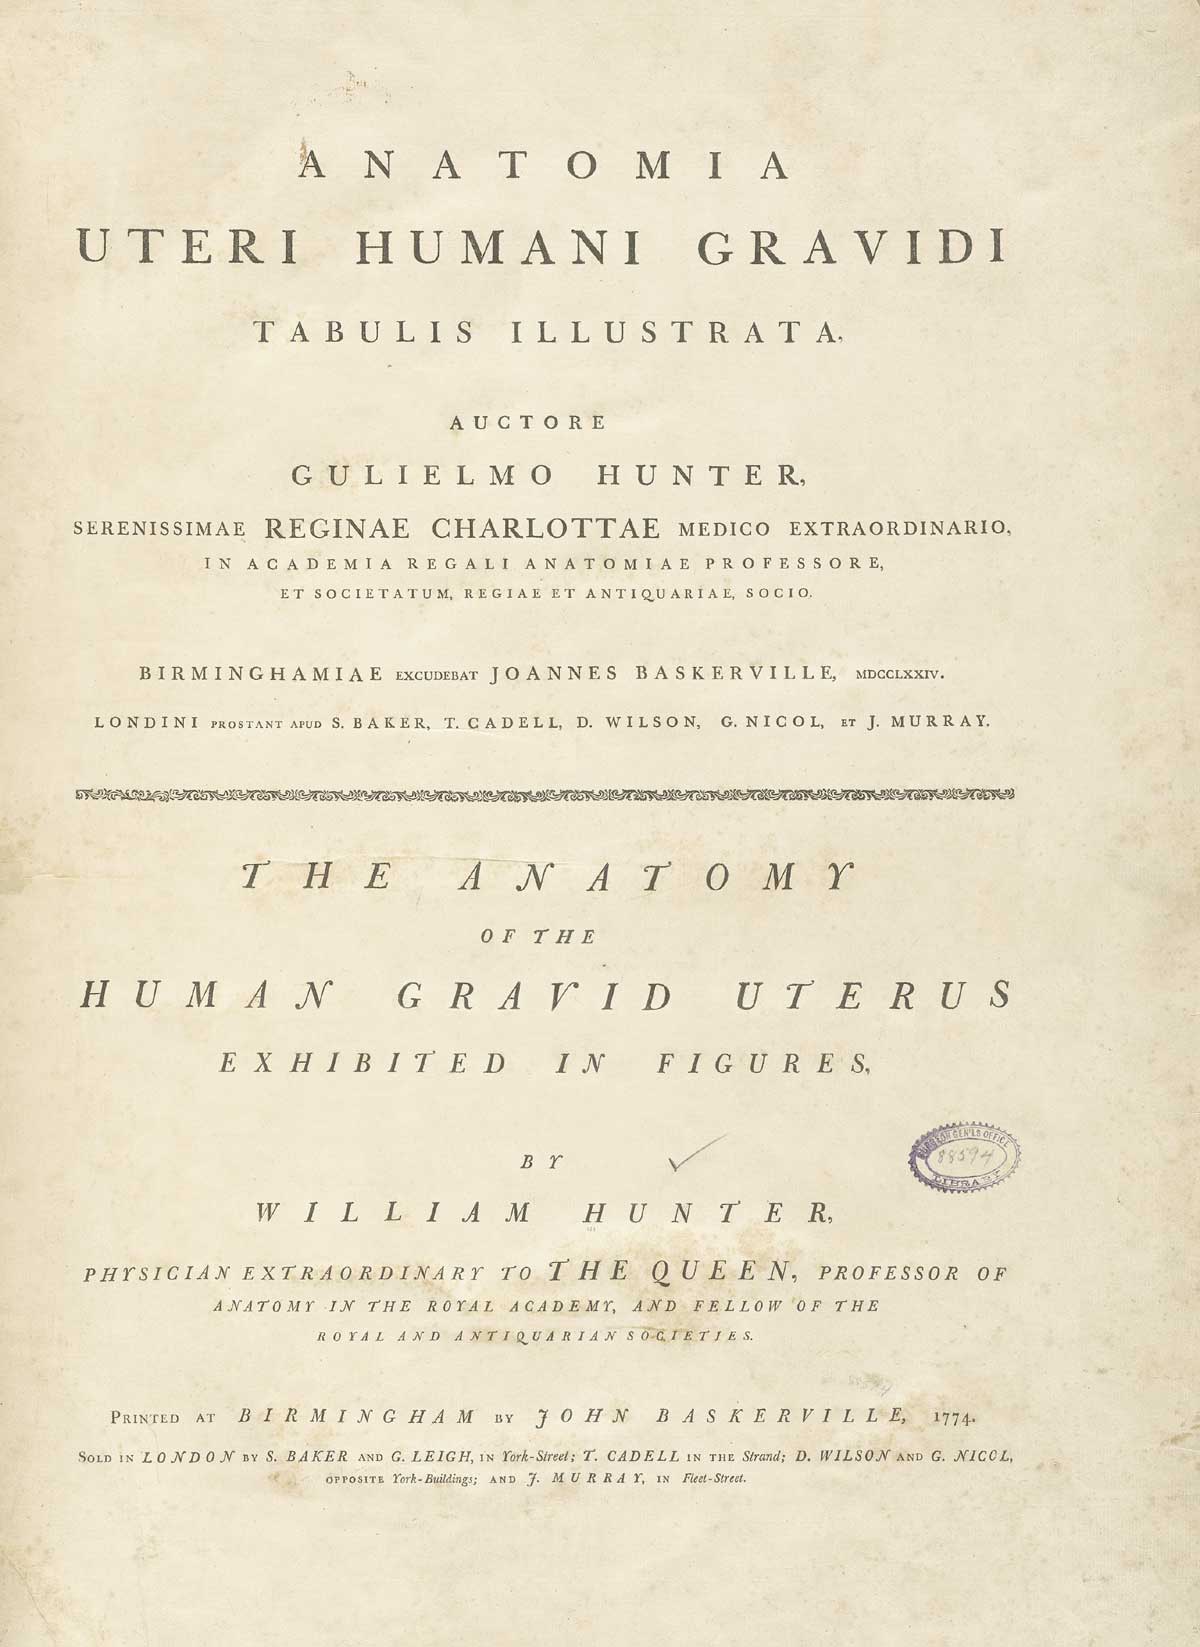 The titlepage of William Hunter's Anatomia uteri humani gravidi tabulis illustrata.